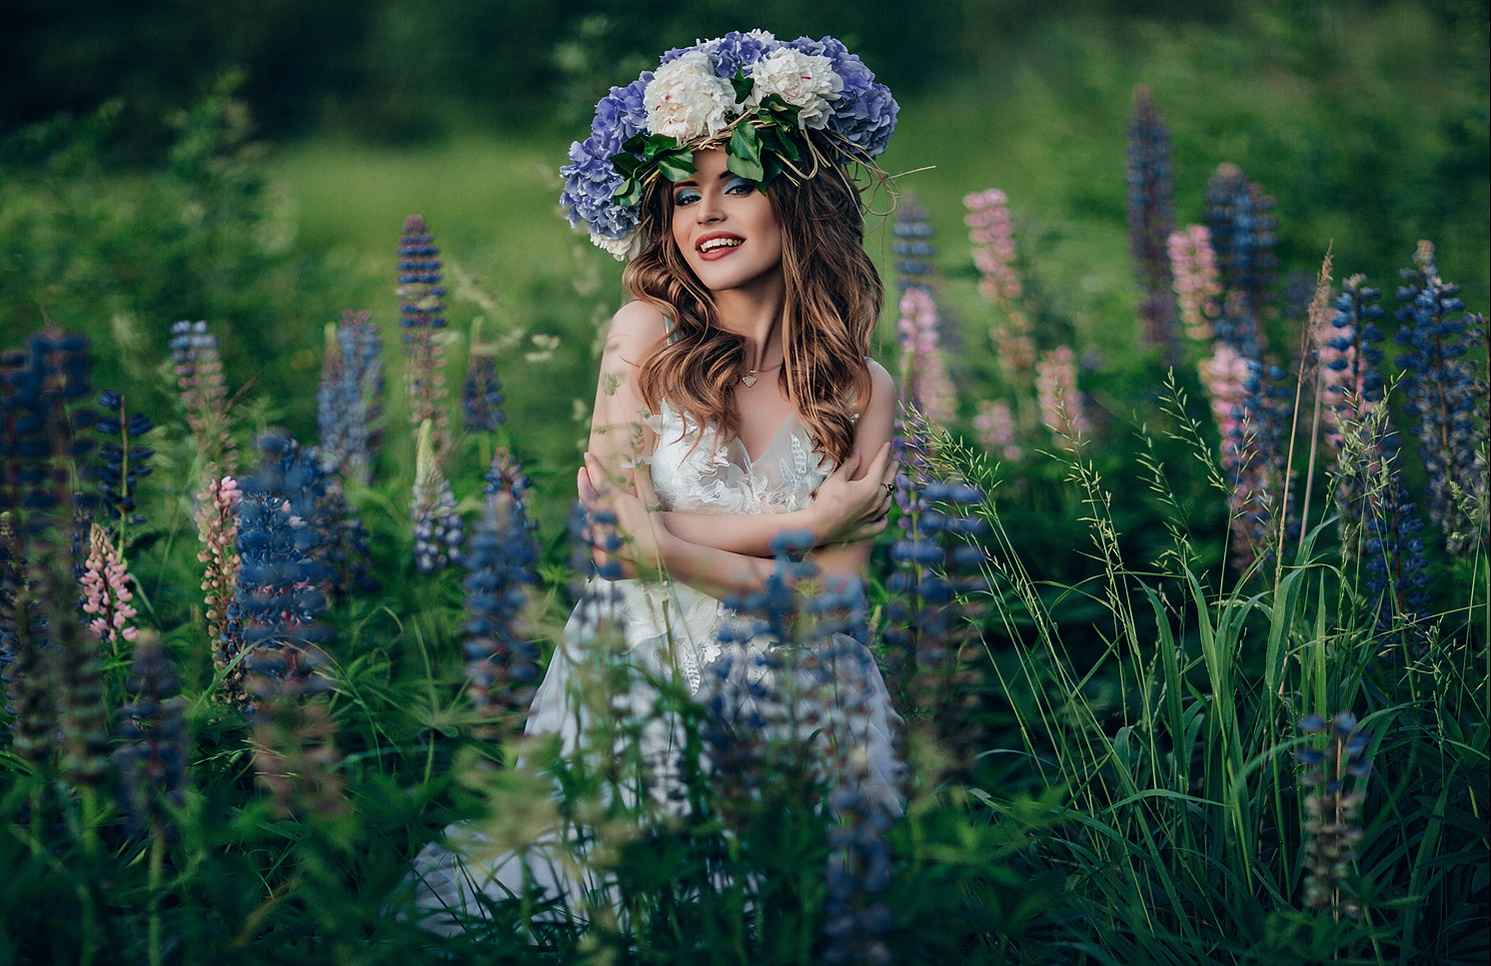 Фото Девушка с венком из цветов на голове стоит в поле, фотограф Анна Киселева